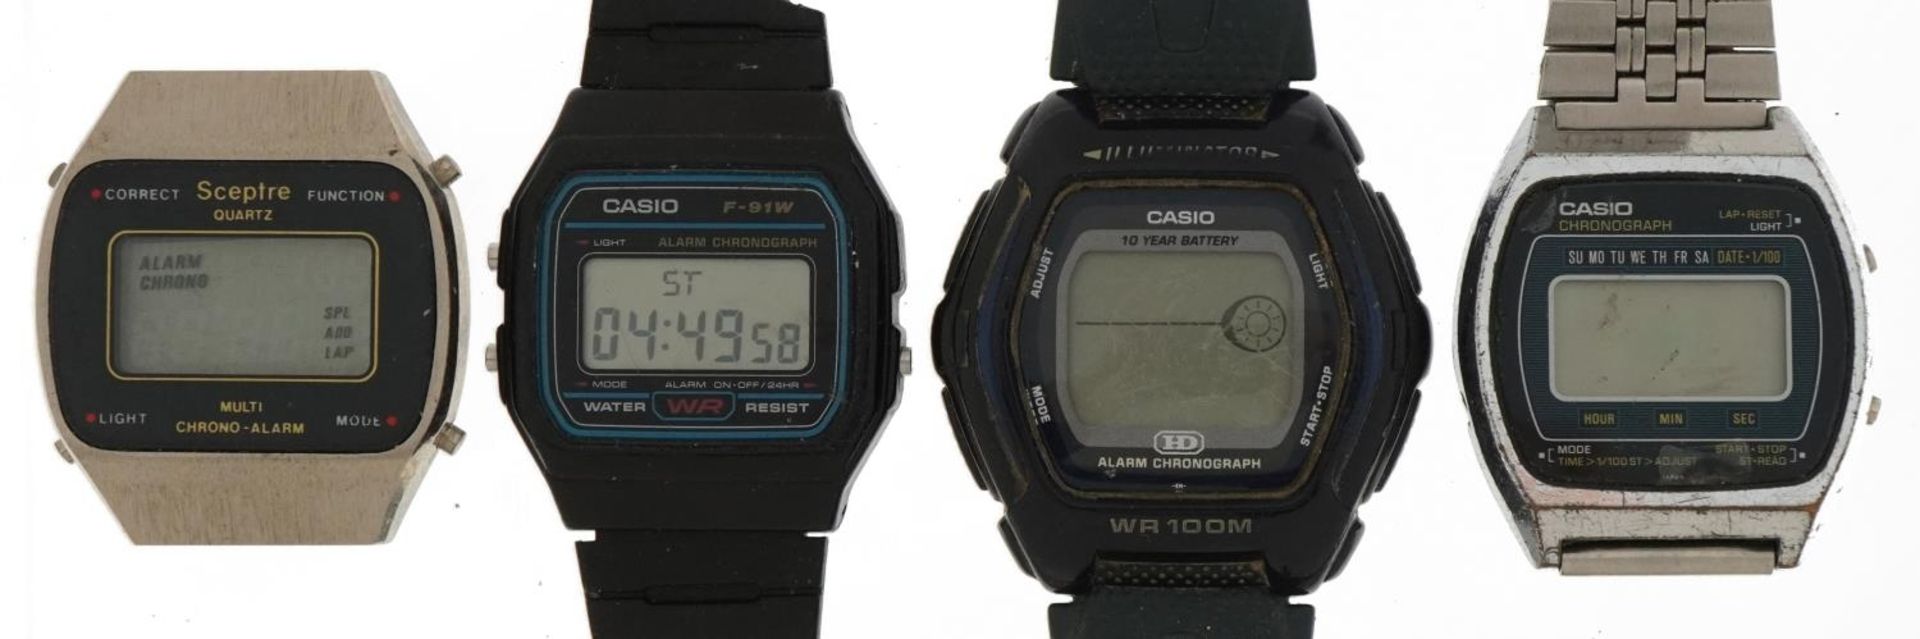 Four vintage gentlemen's electronic wristwatches including Casio F-91W, Casio alarm chronograph